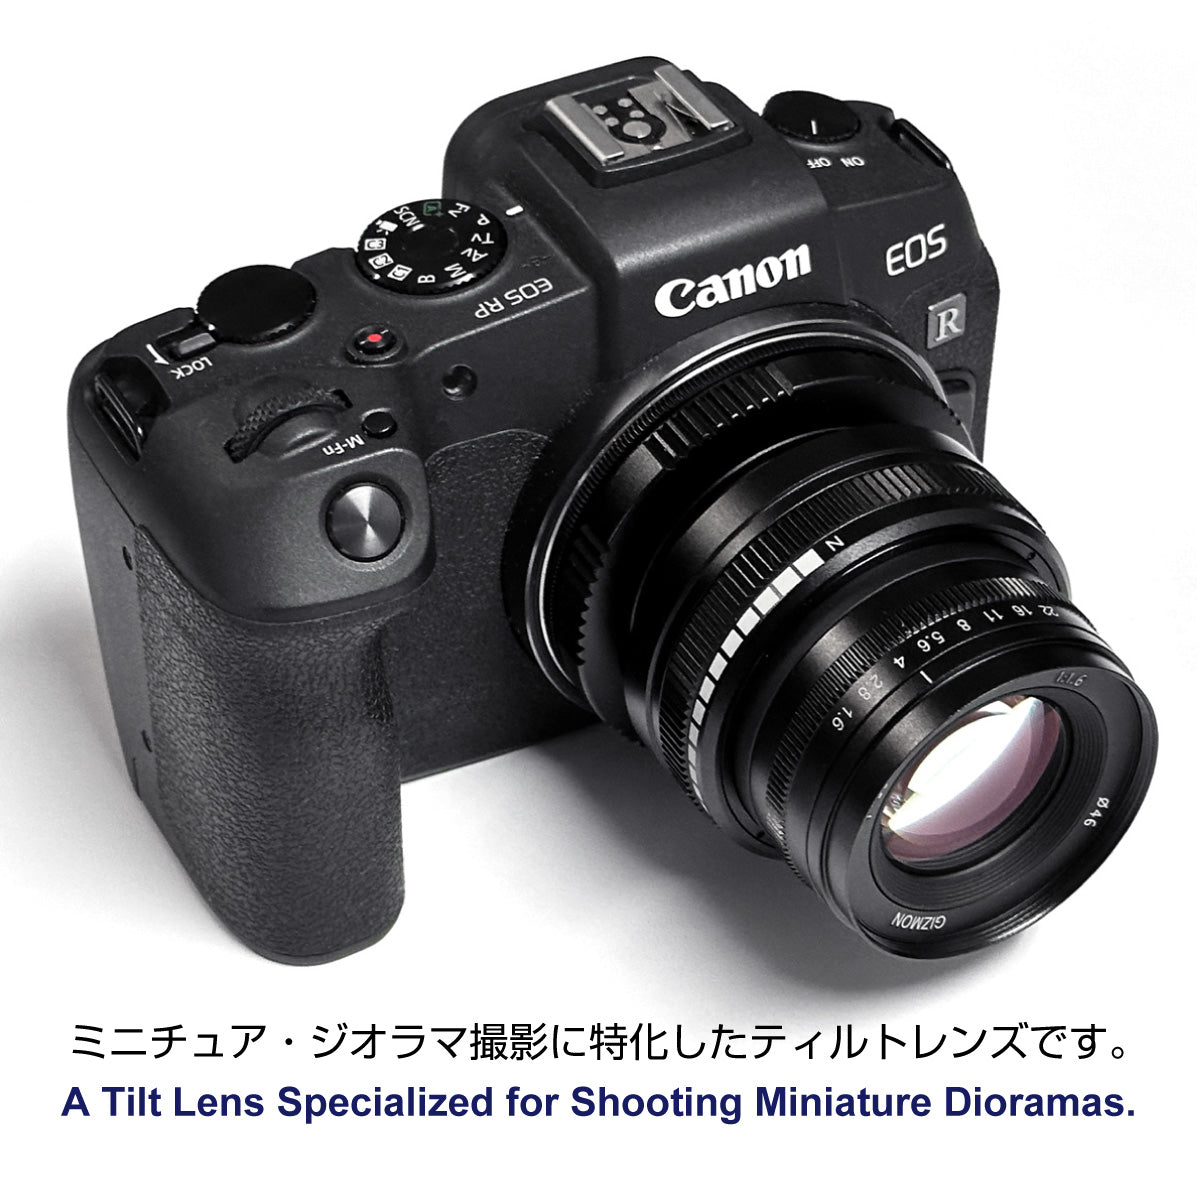 GIZMON Miniature Tilt Lens – ギズモショップ